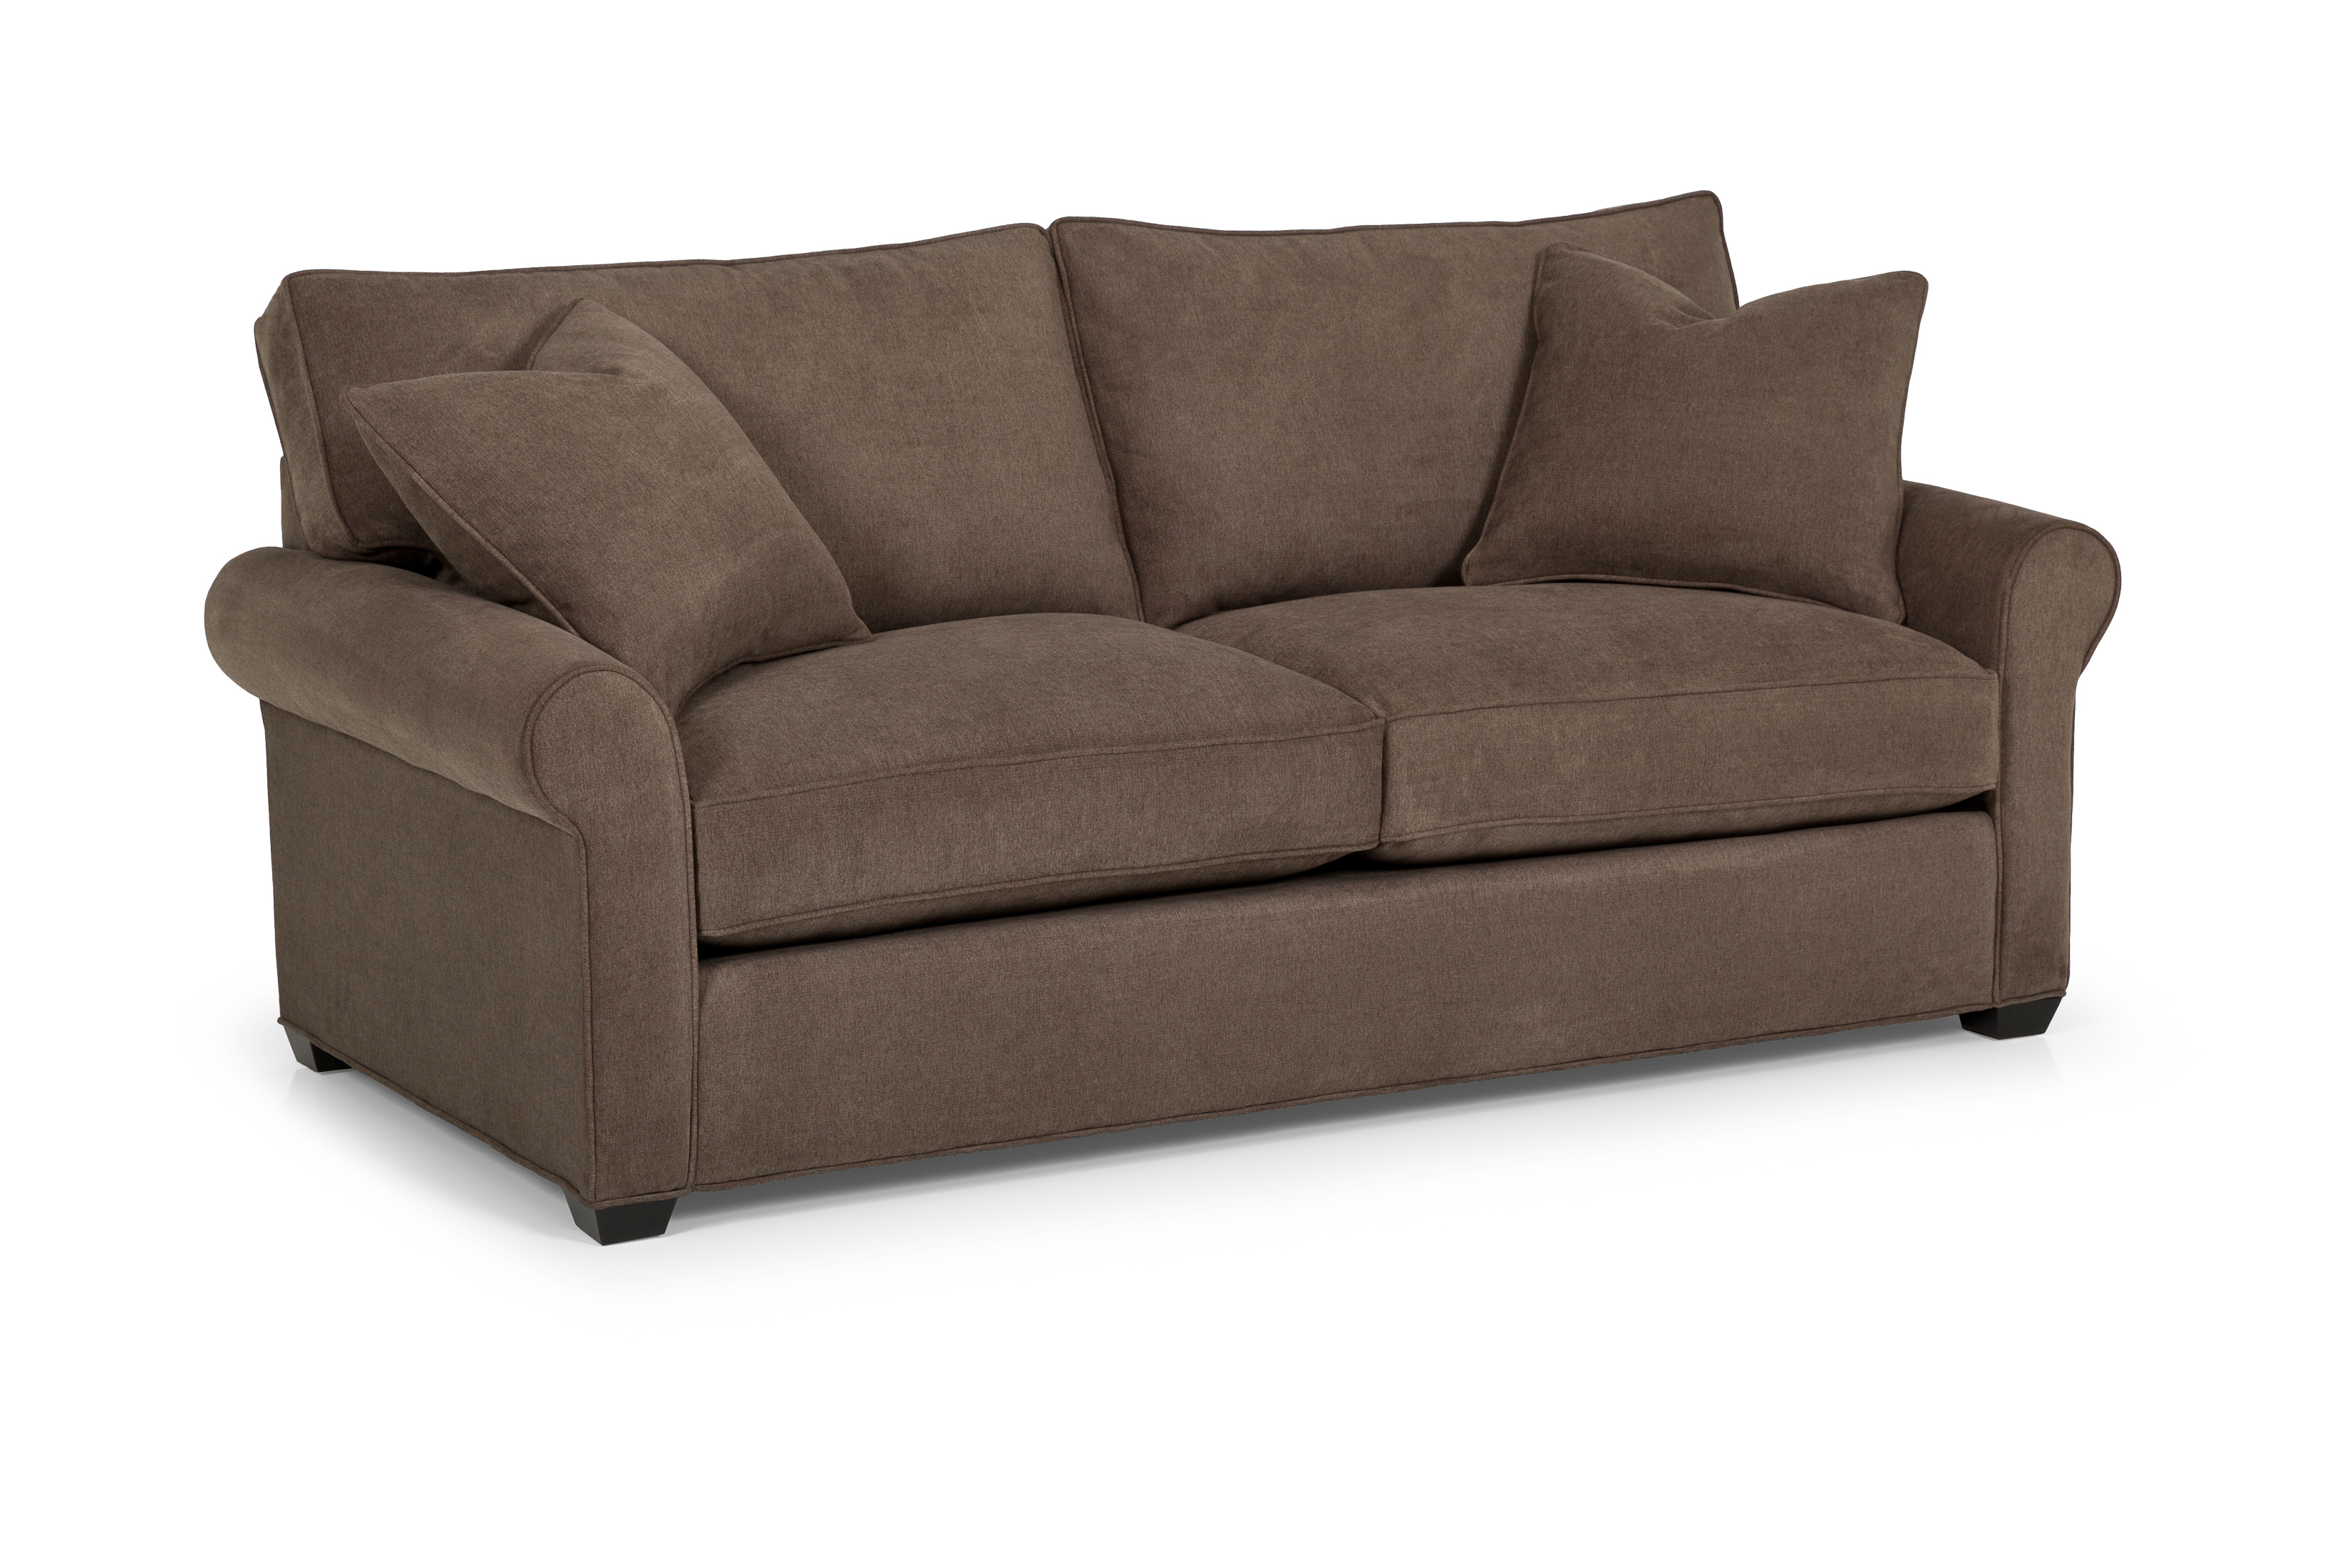 Bradley's Furniture Etc. - Stanton Fabric and Leather Sofas